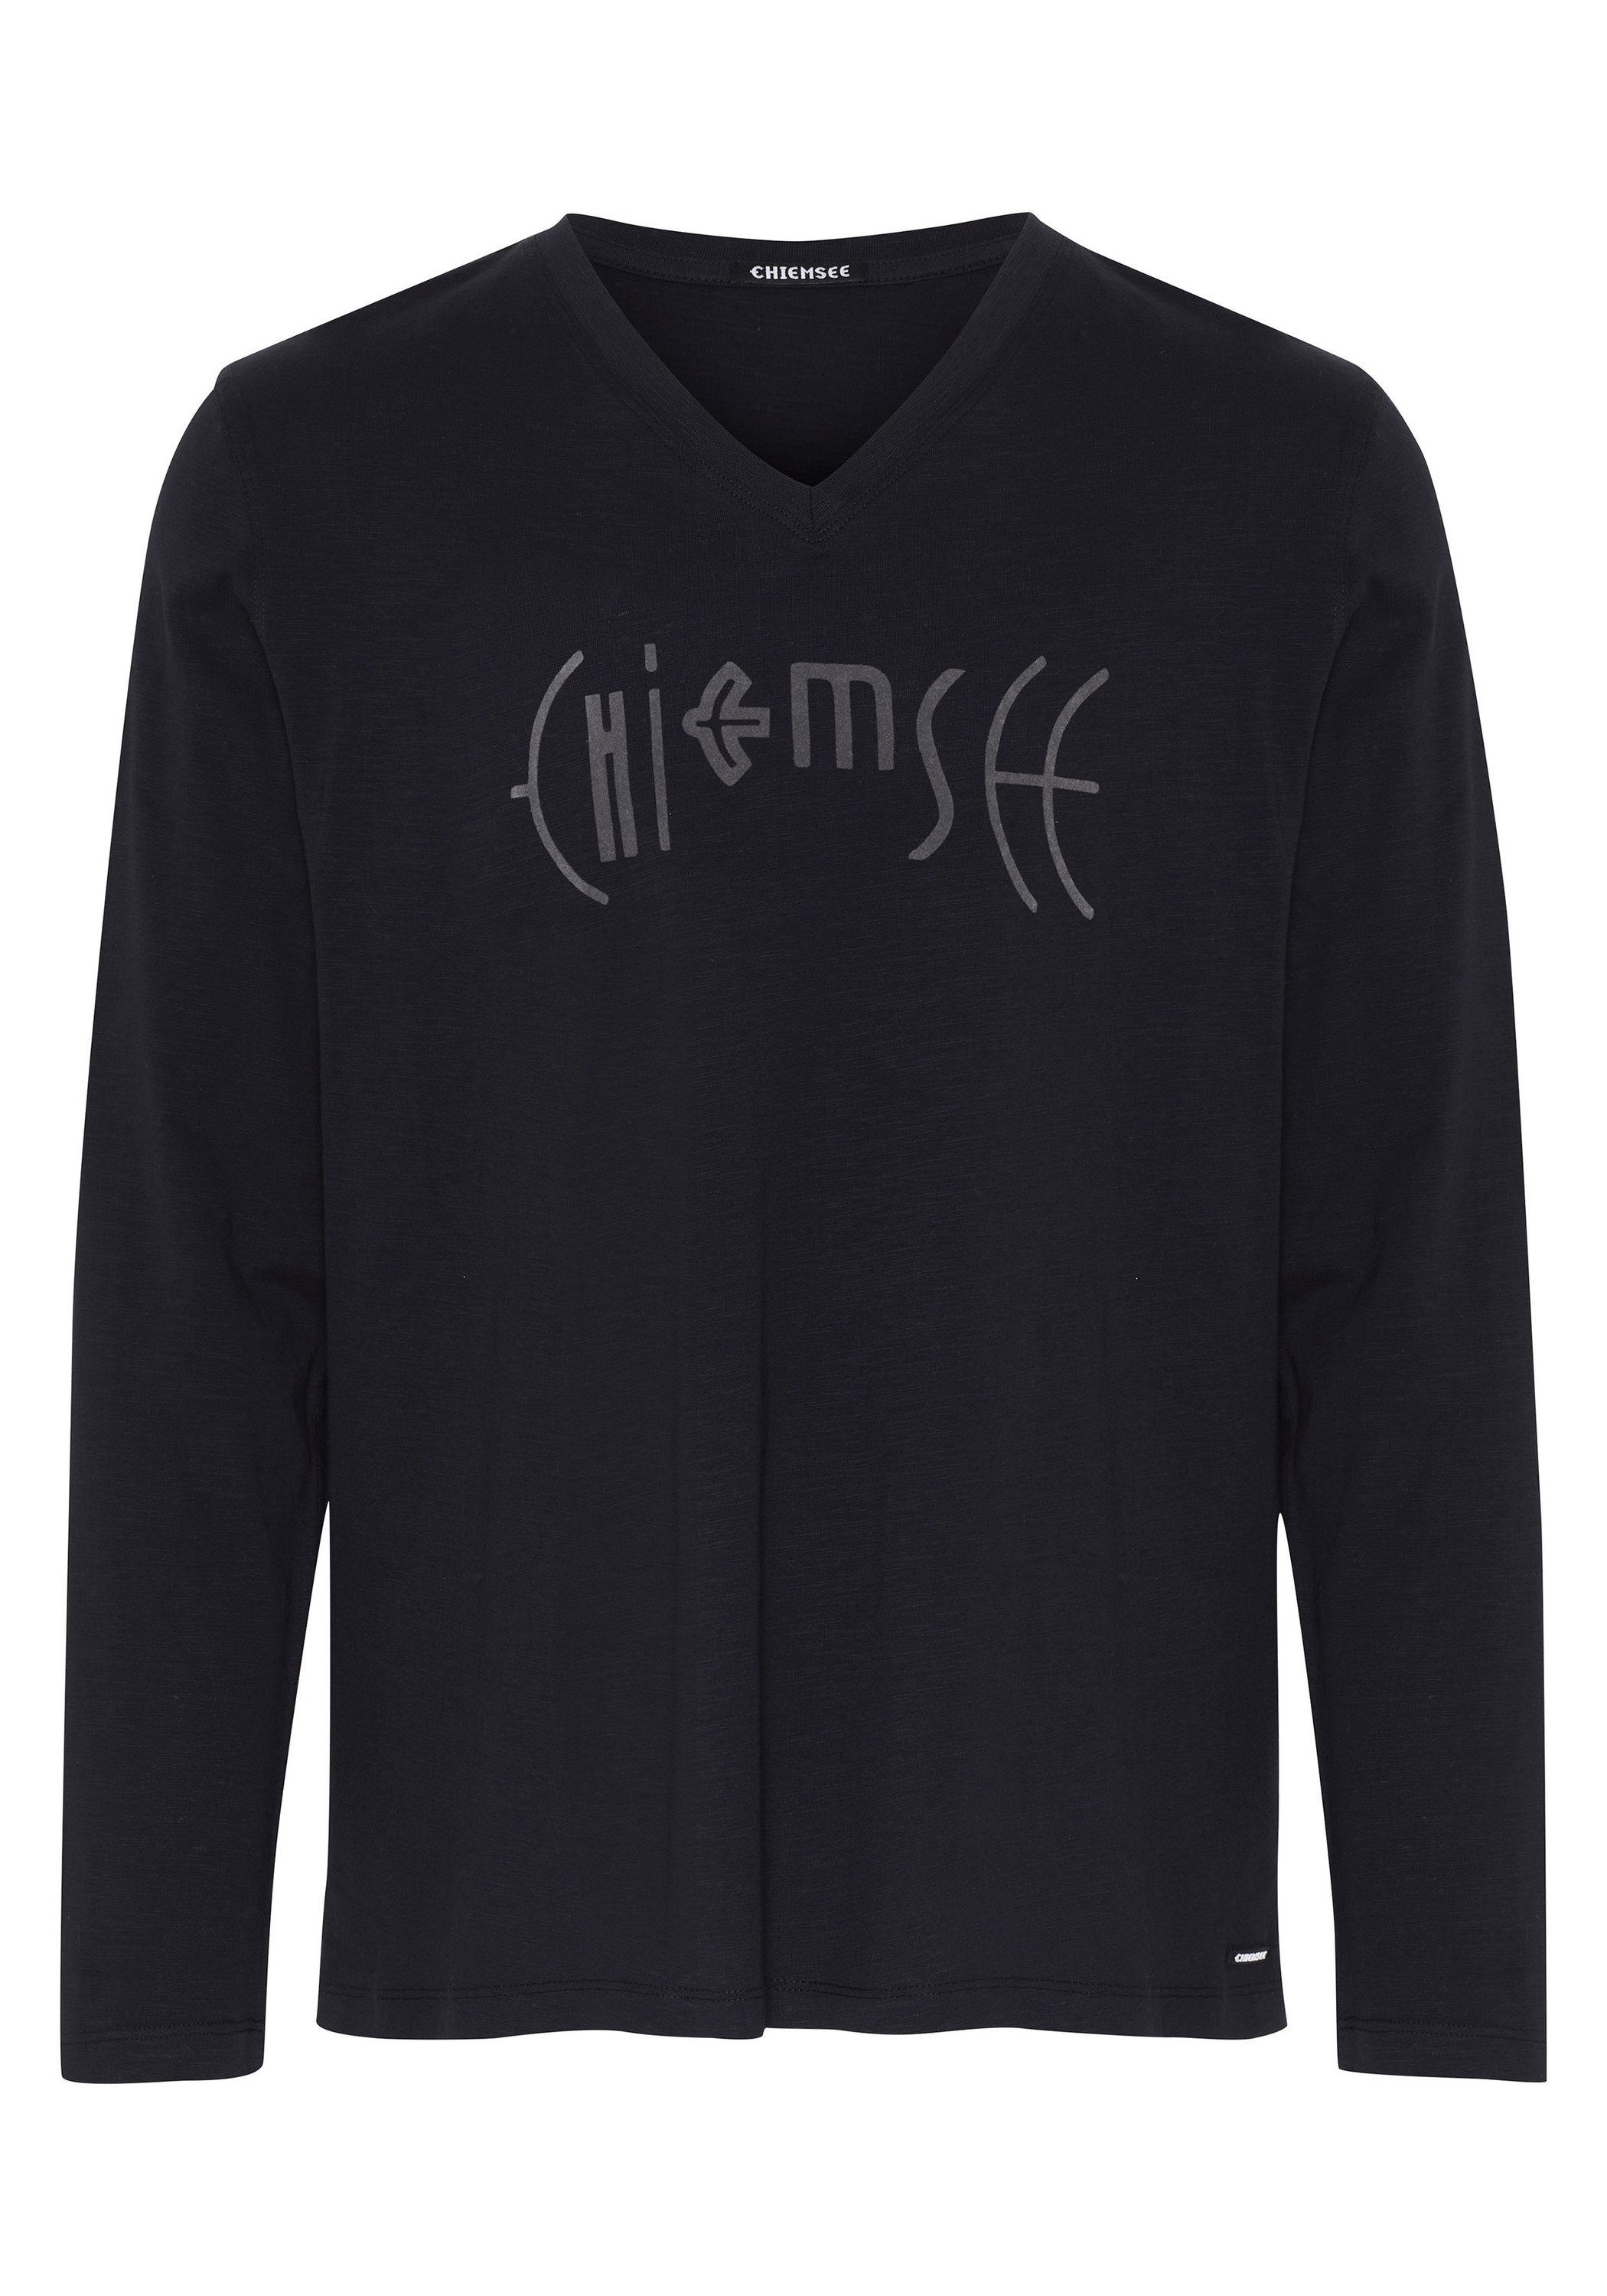 Chiemsee Longsleeve Langarmshirt mit Label-Schriftzug und V-Ausschnitt